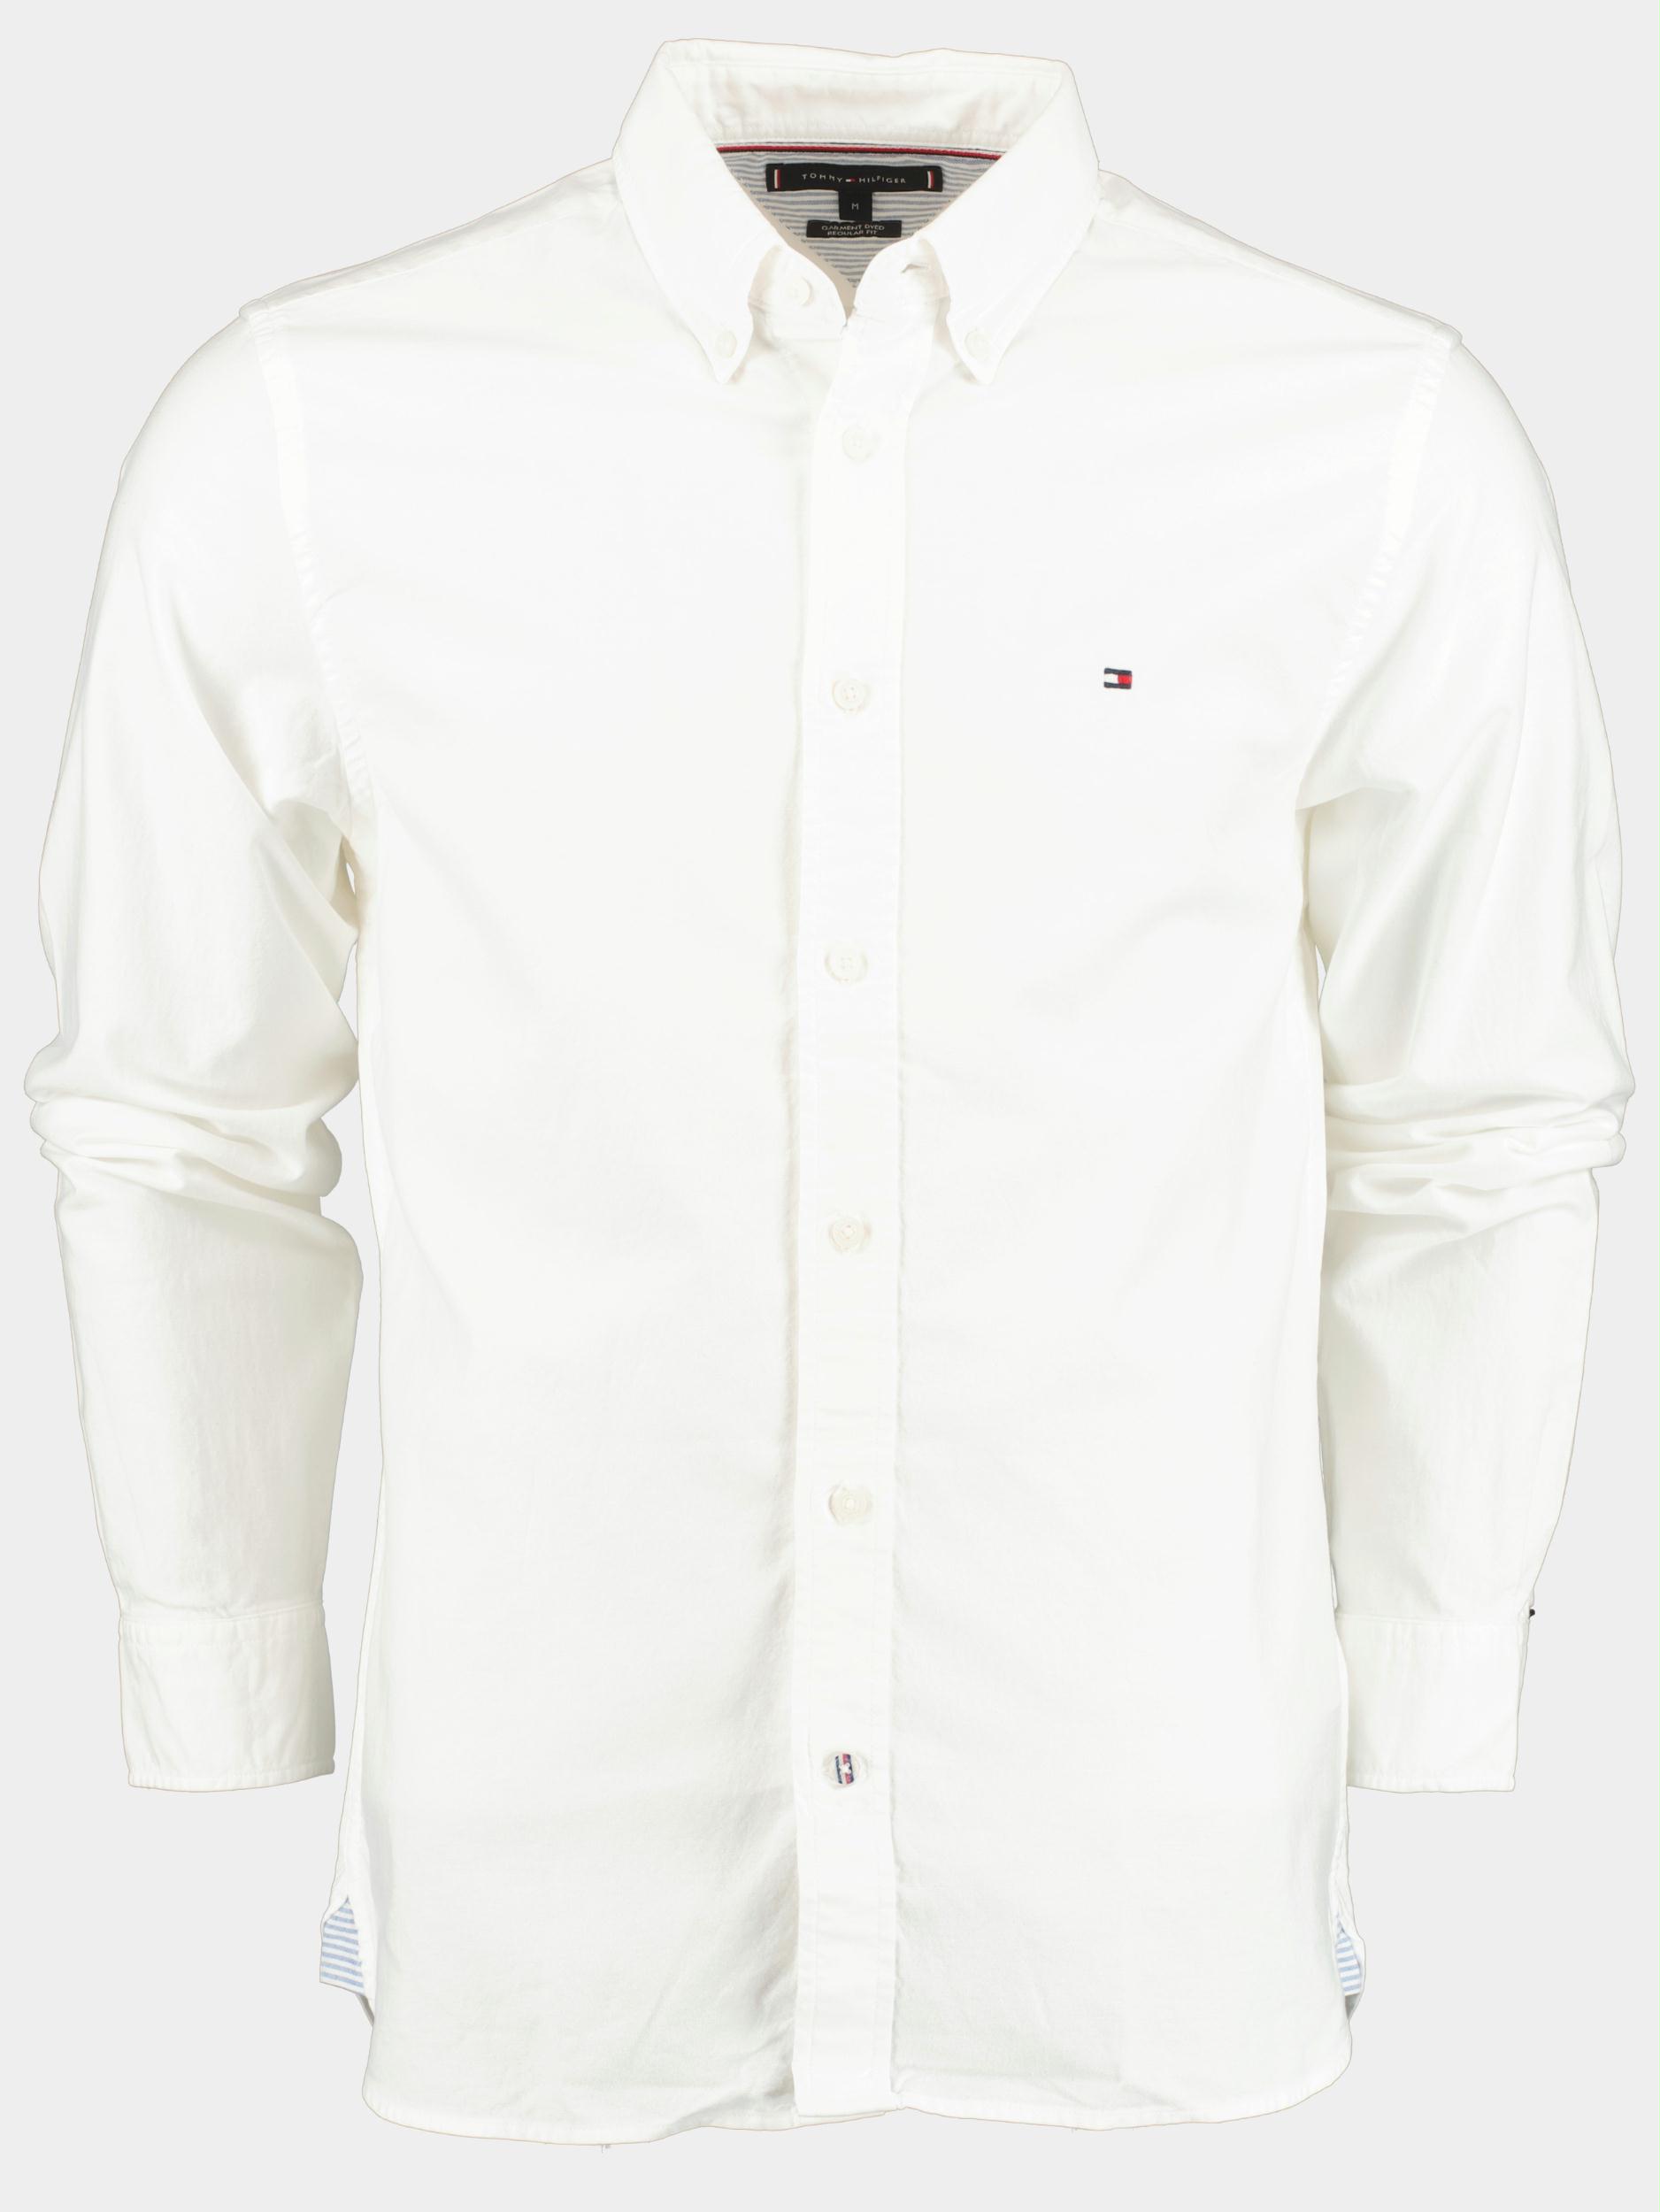 Tommy Hilfiger Casual hemd lange mouw Wit Pigment garment dye MW0MW30677/YBL